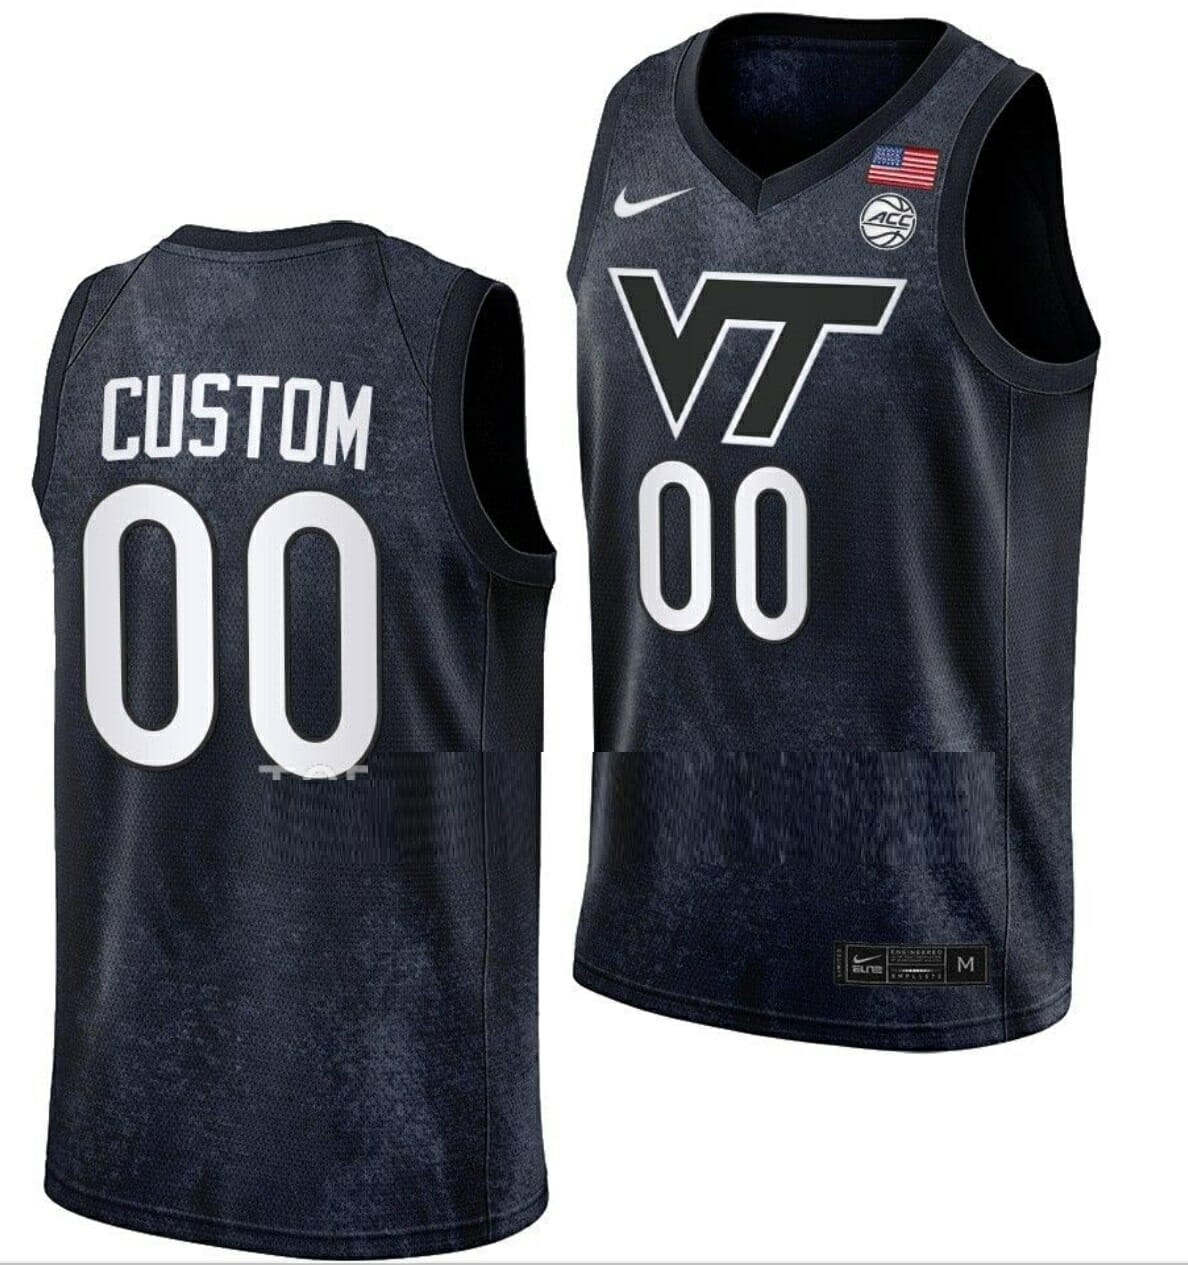 Cumbre logo Publicación Trending] Buy New Custom Virginia Tech Hokies Jersey Black